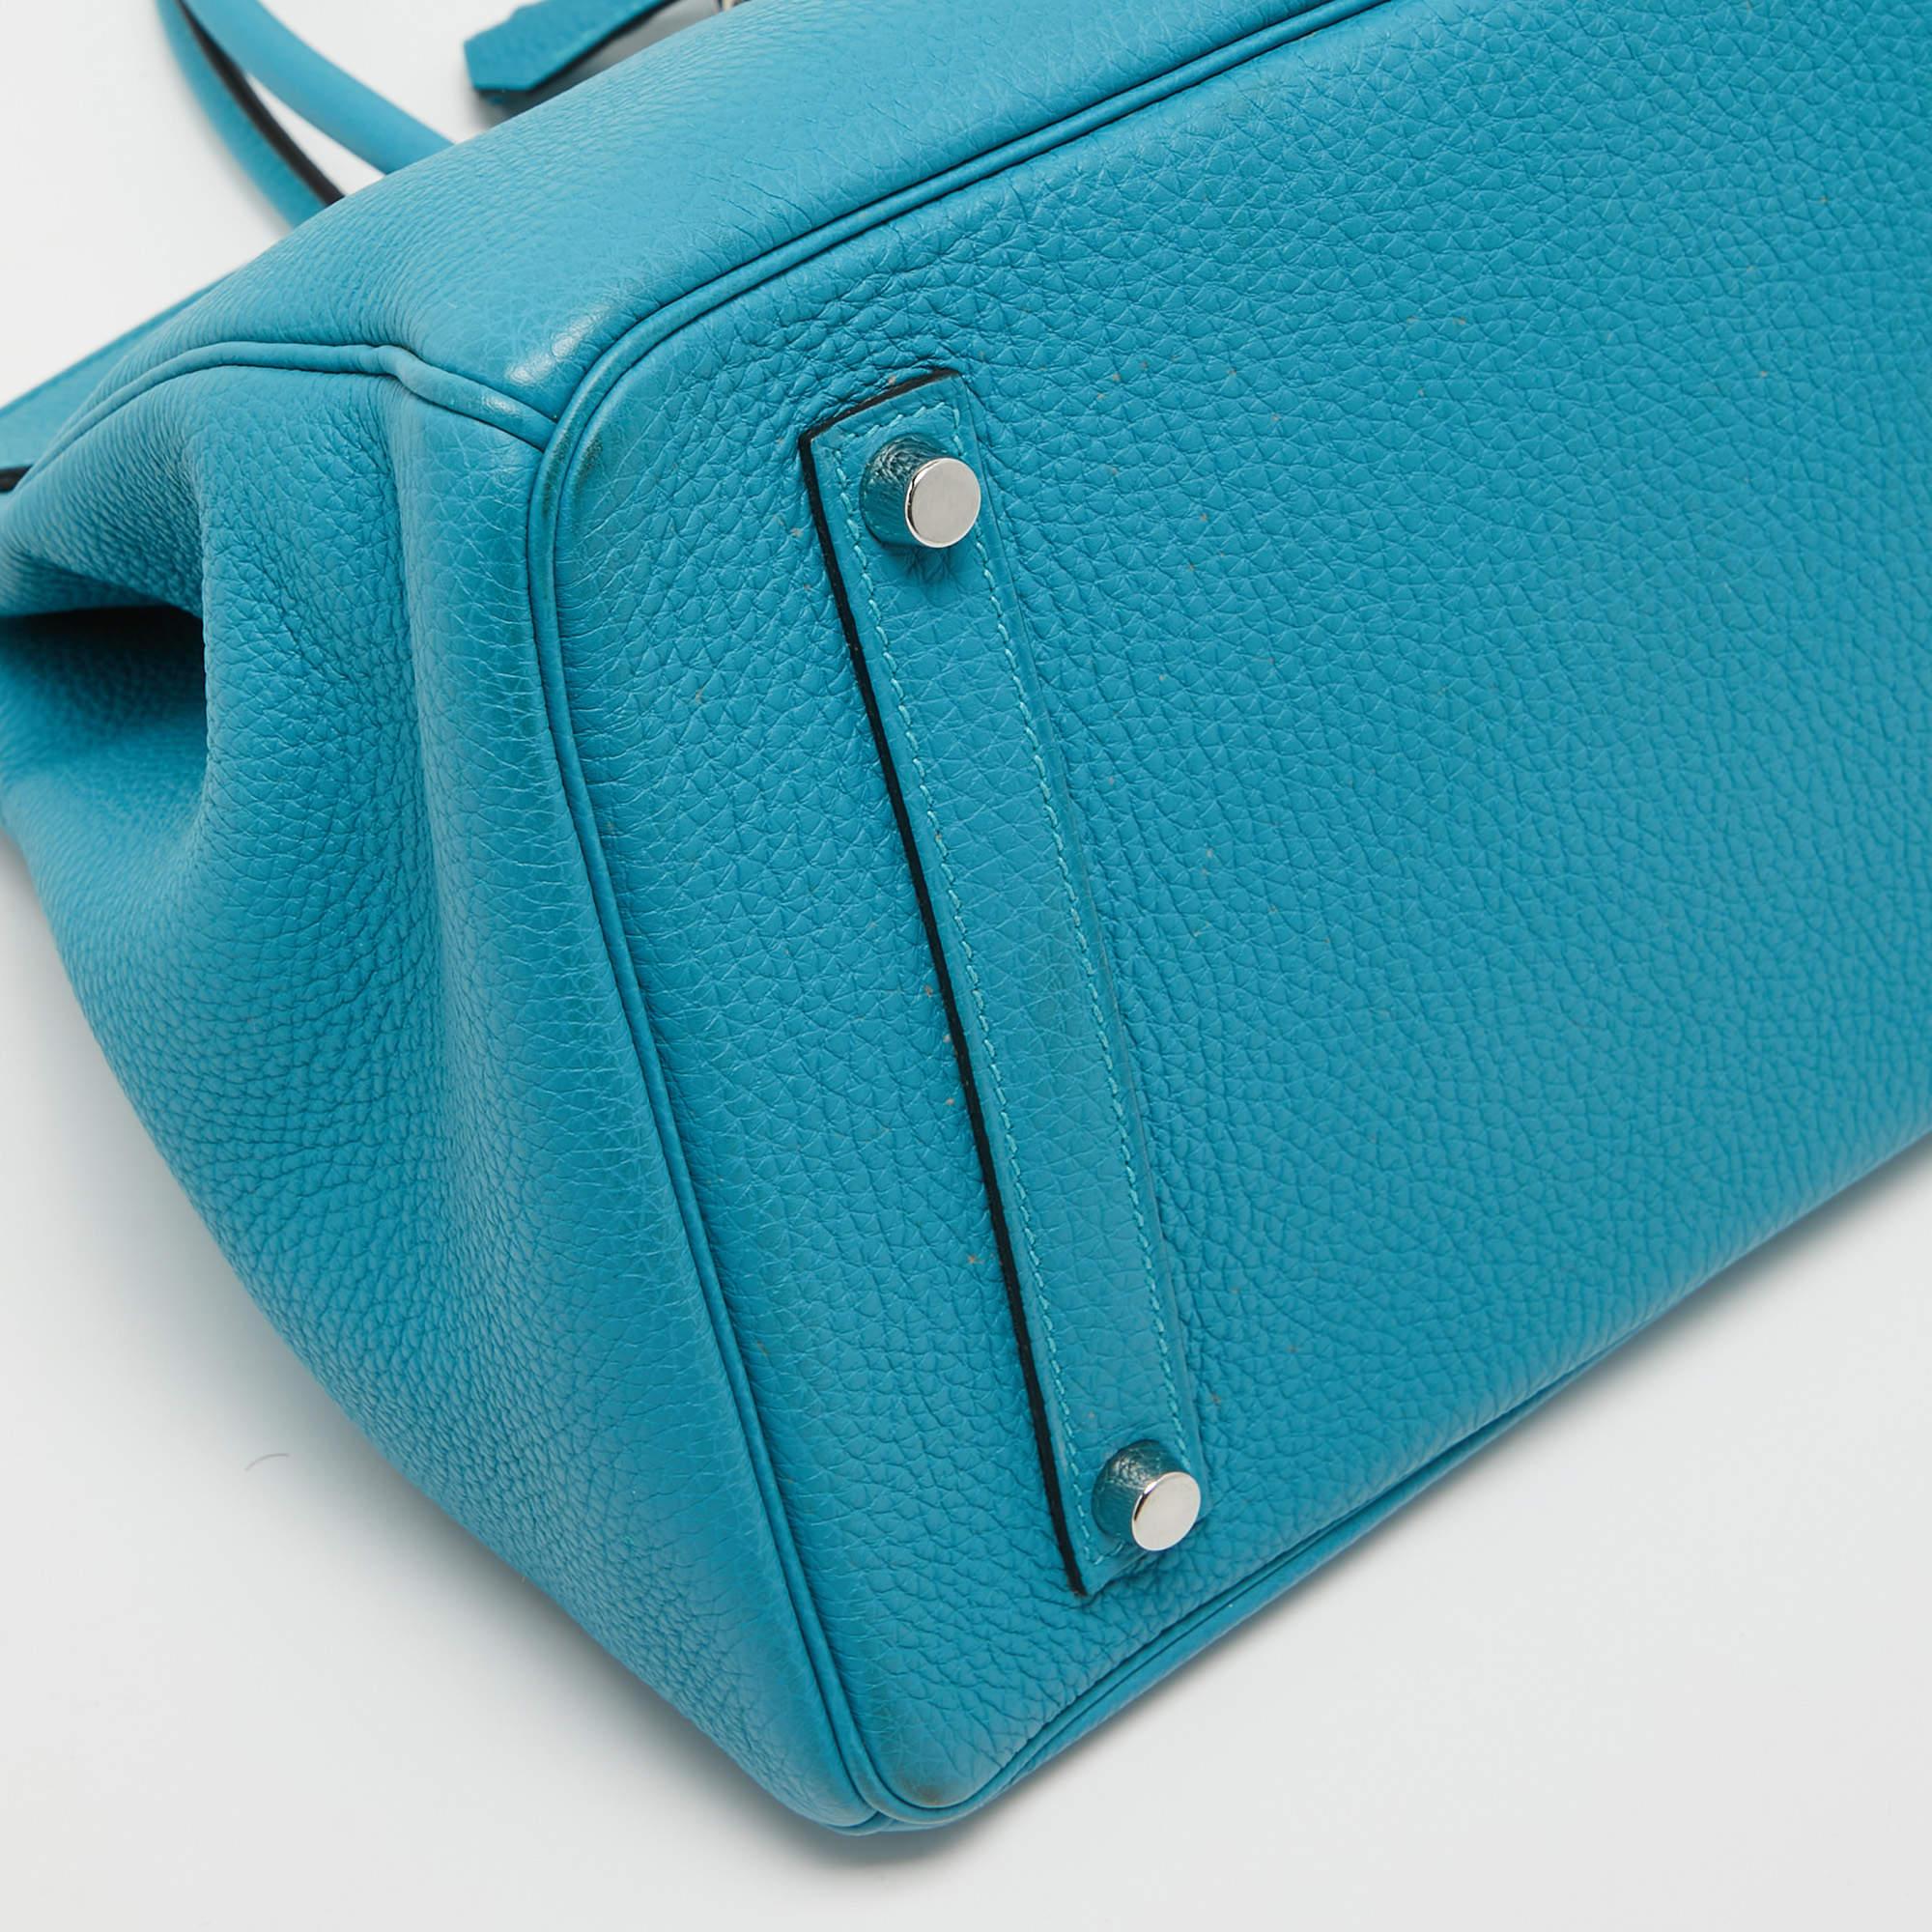 Hermes Turquoise Blue Togo Leather Palladium Finish Birkin 35 Bag For Sale 3